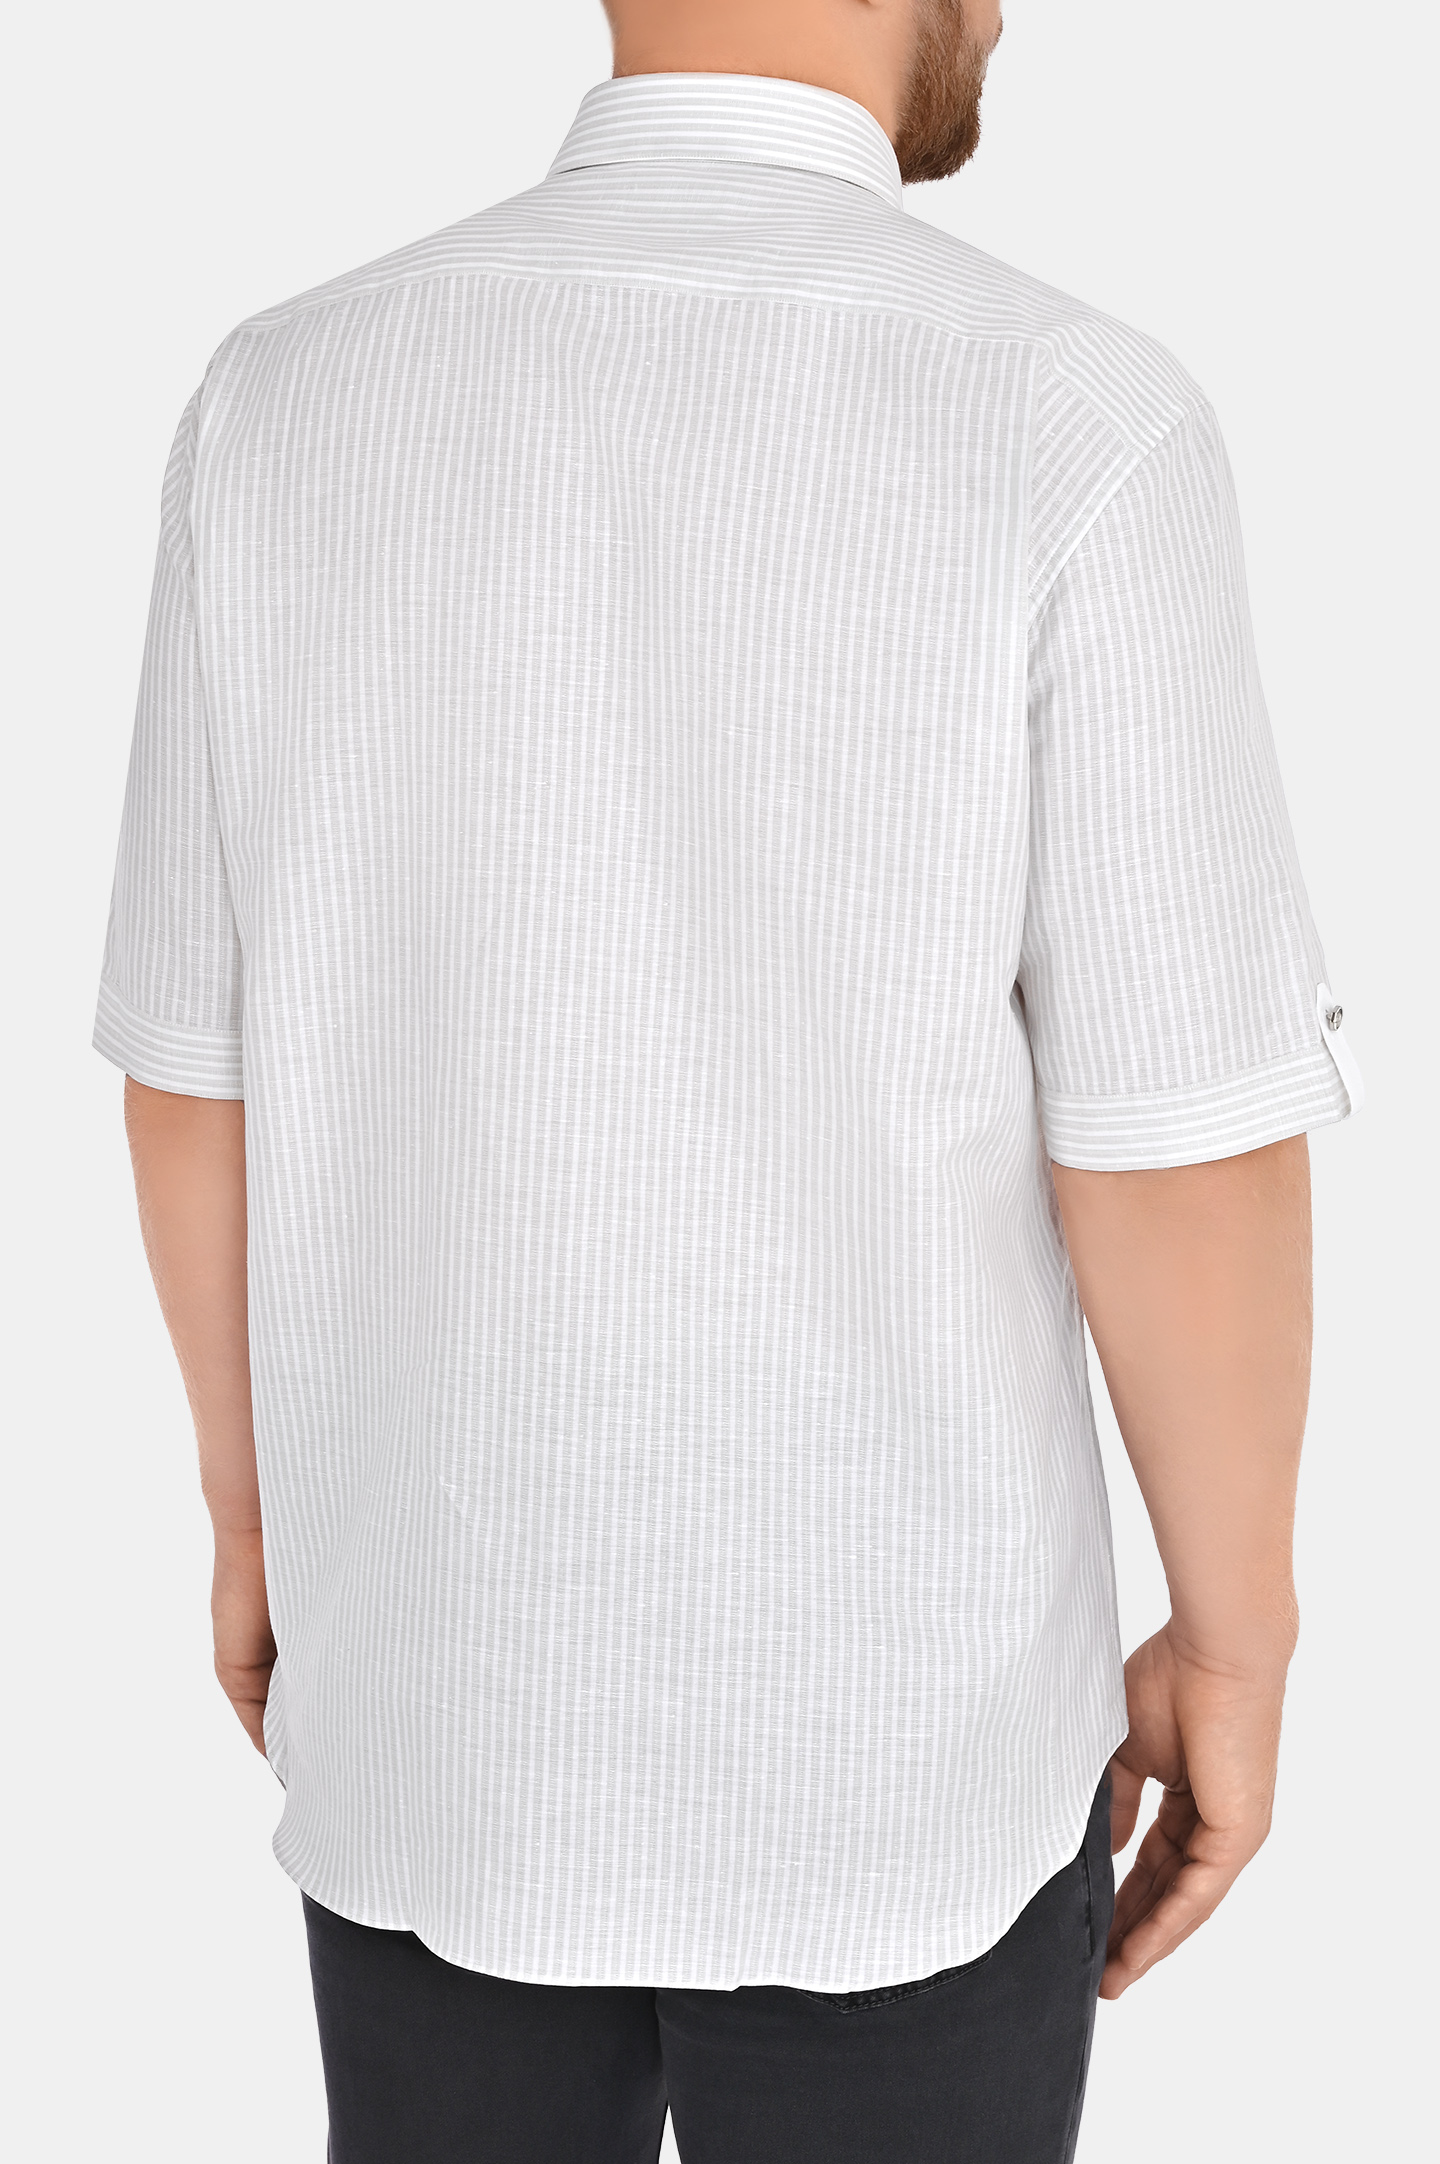 Рубашка STEFANO RICCI MC006729 R1259, цвет: Белый, Мужской